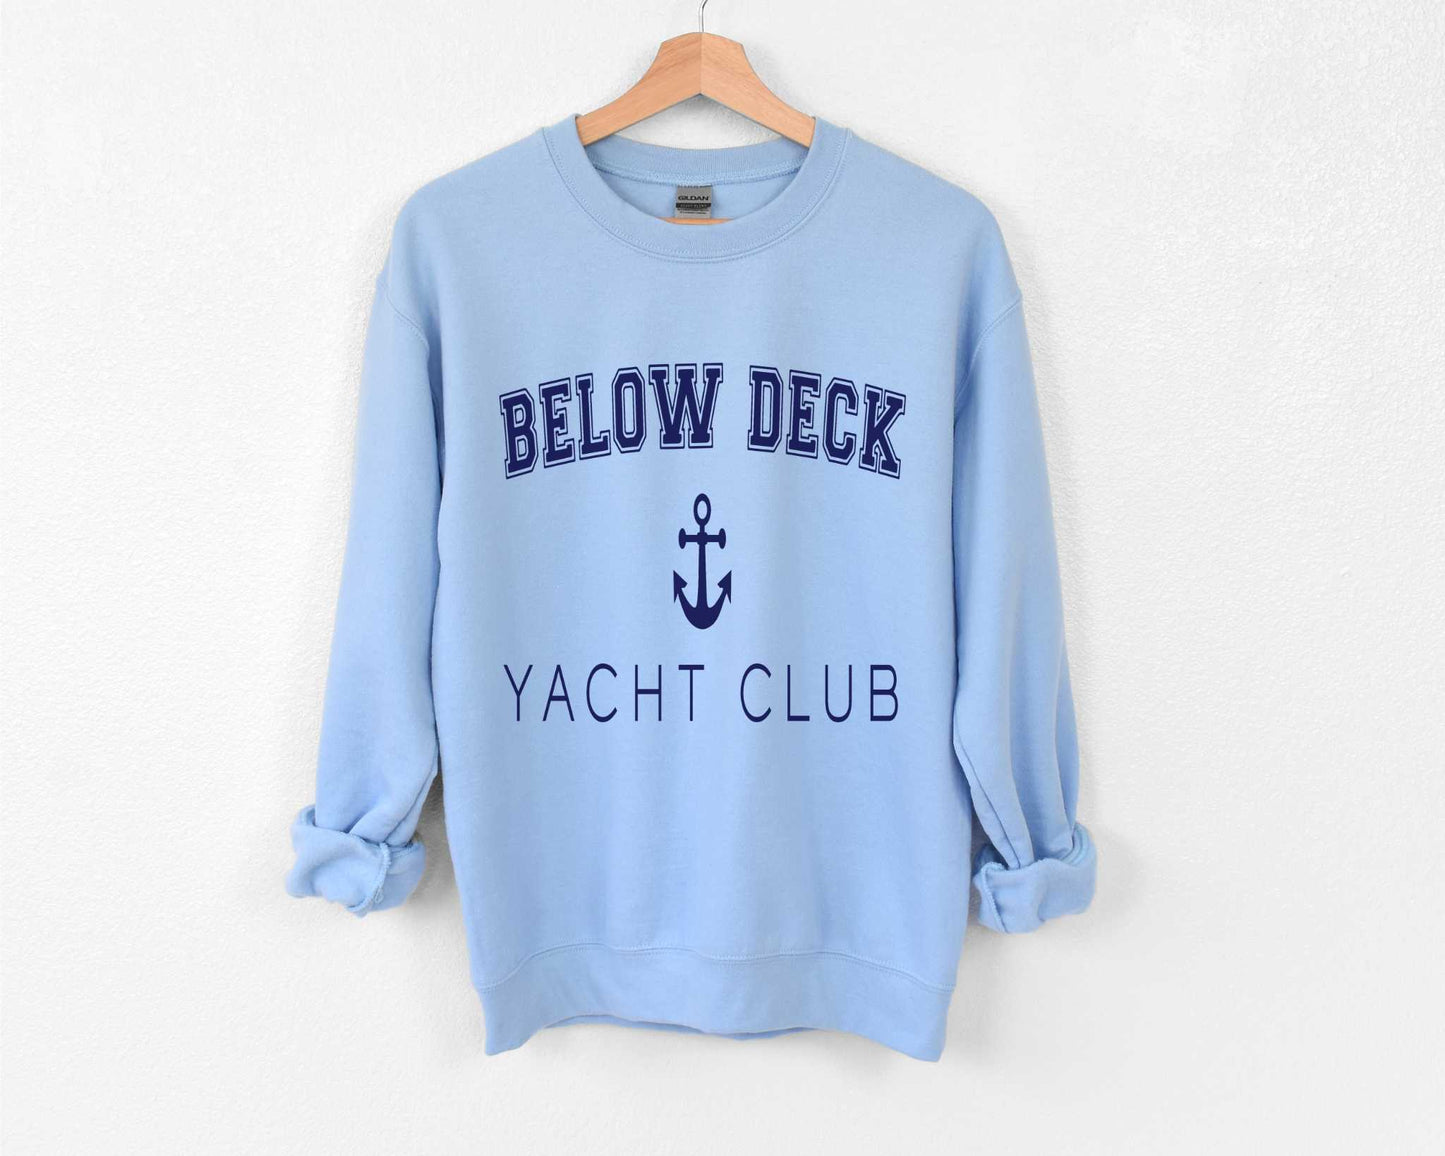 Below Deck Sweatshirt in Light Blue